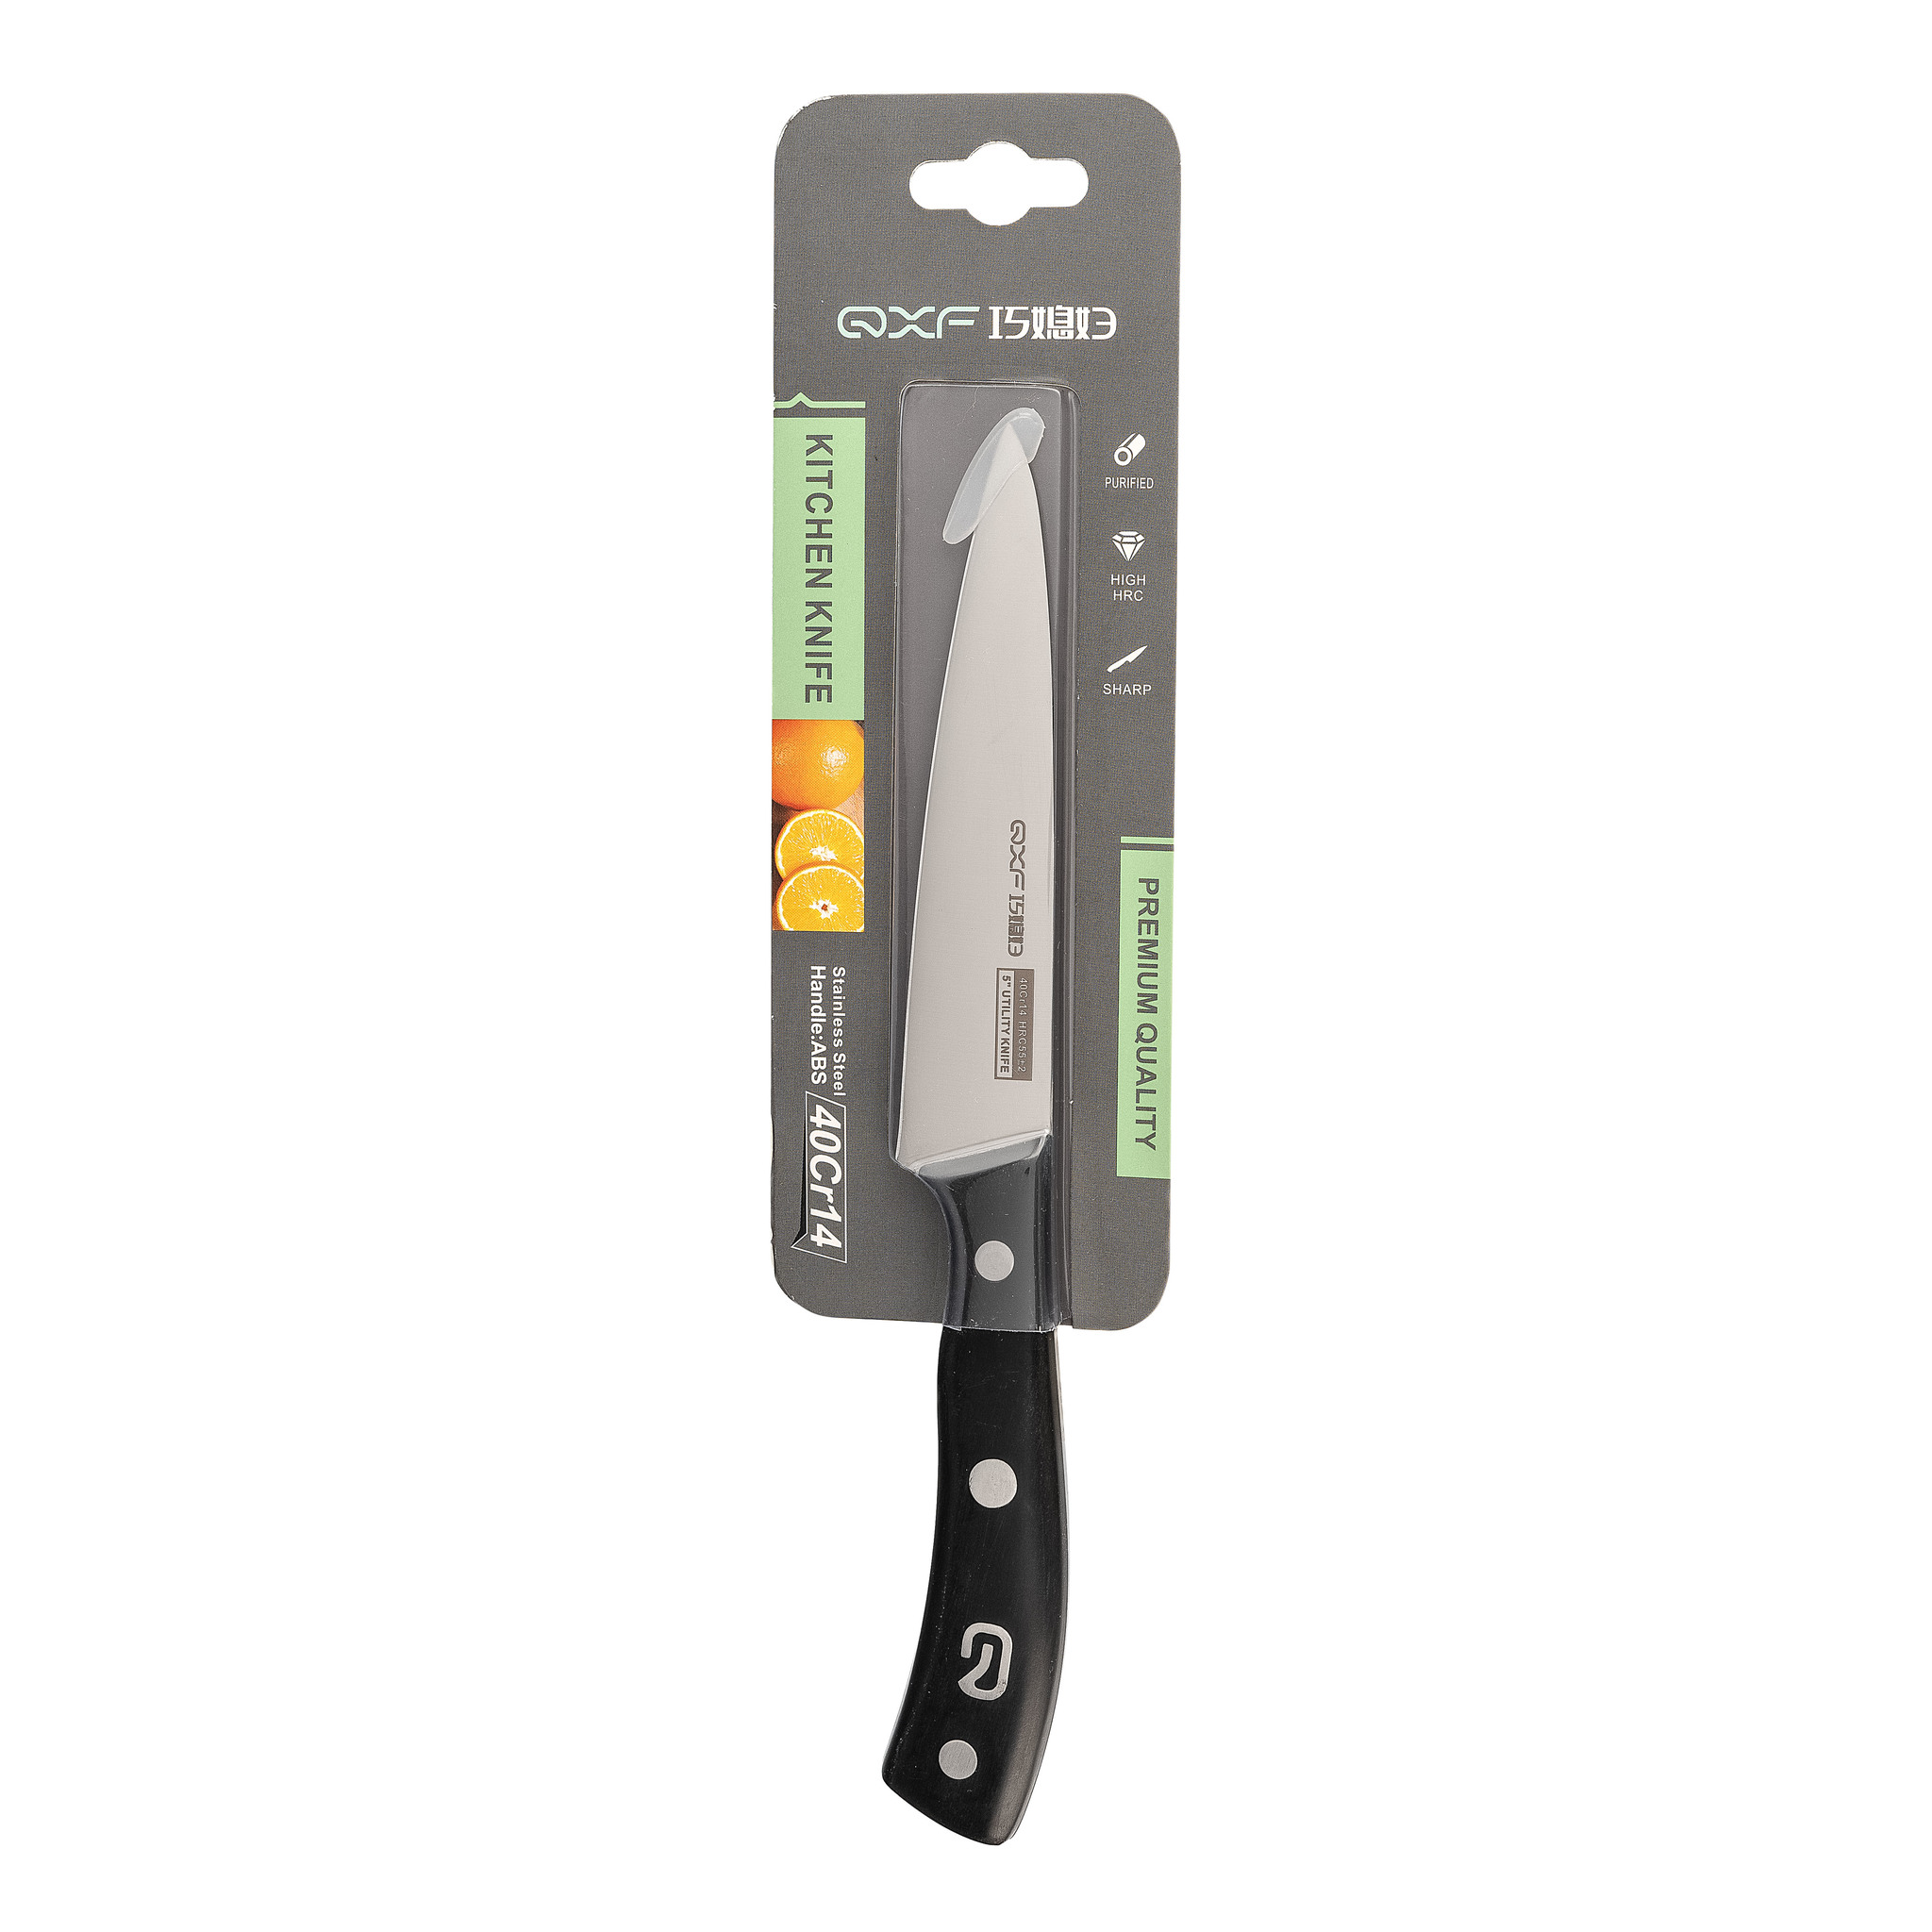 Кухонный универсальный нож Tuotown R-4265, 125 мм